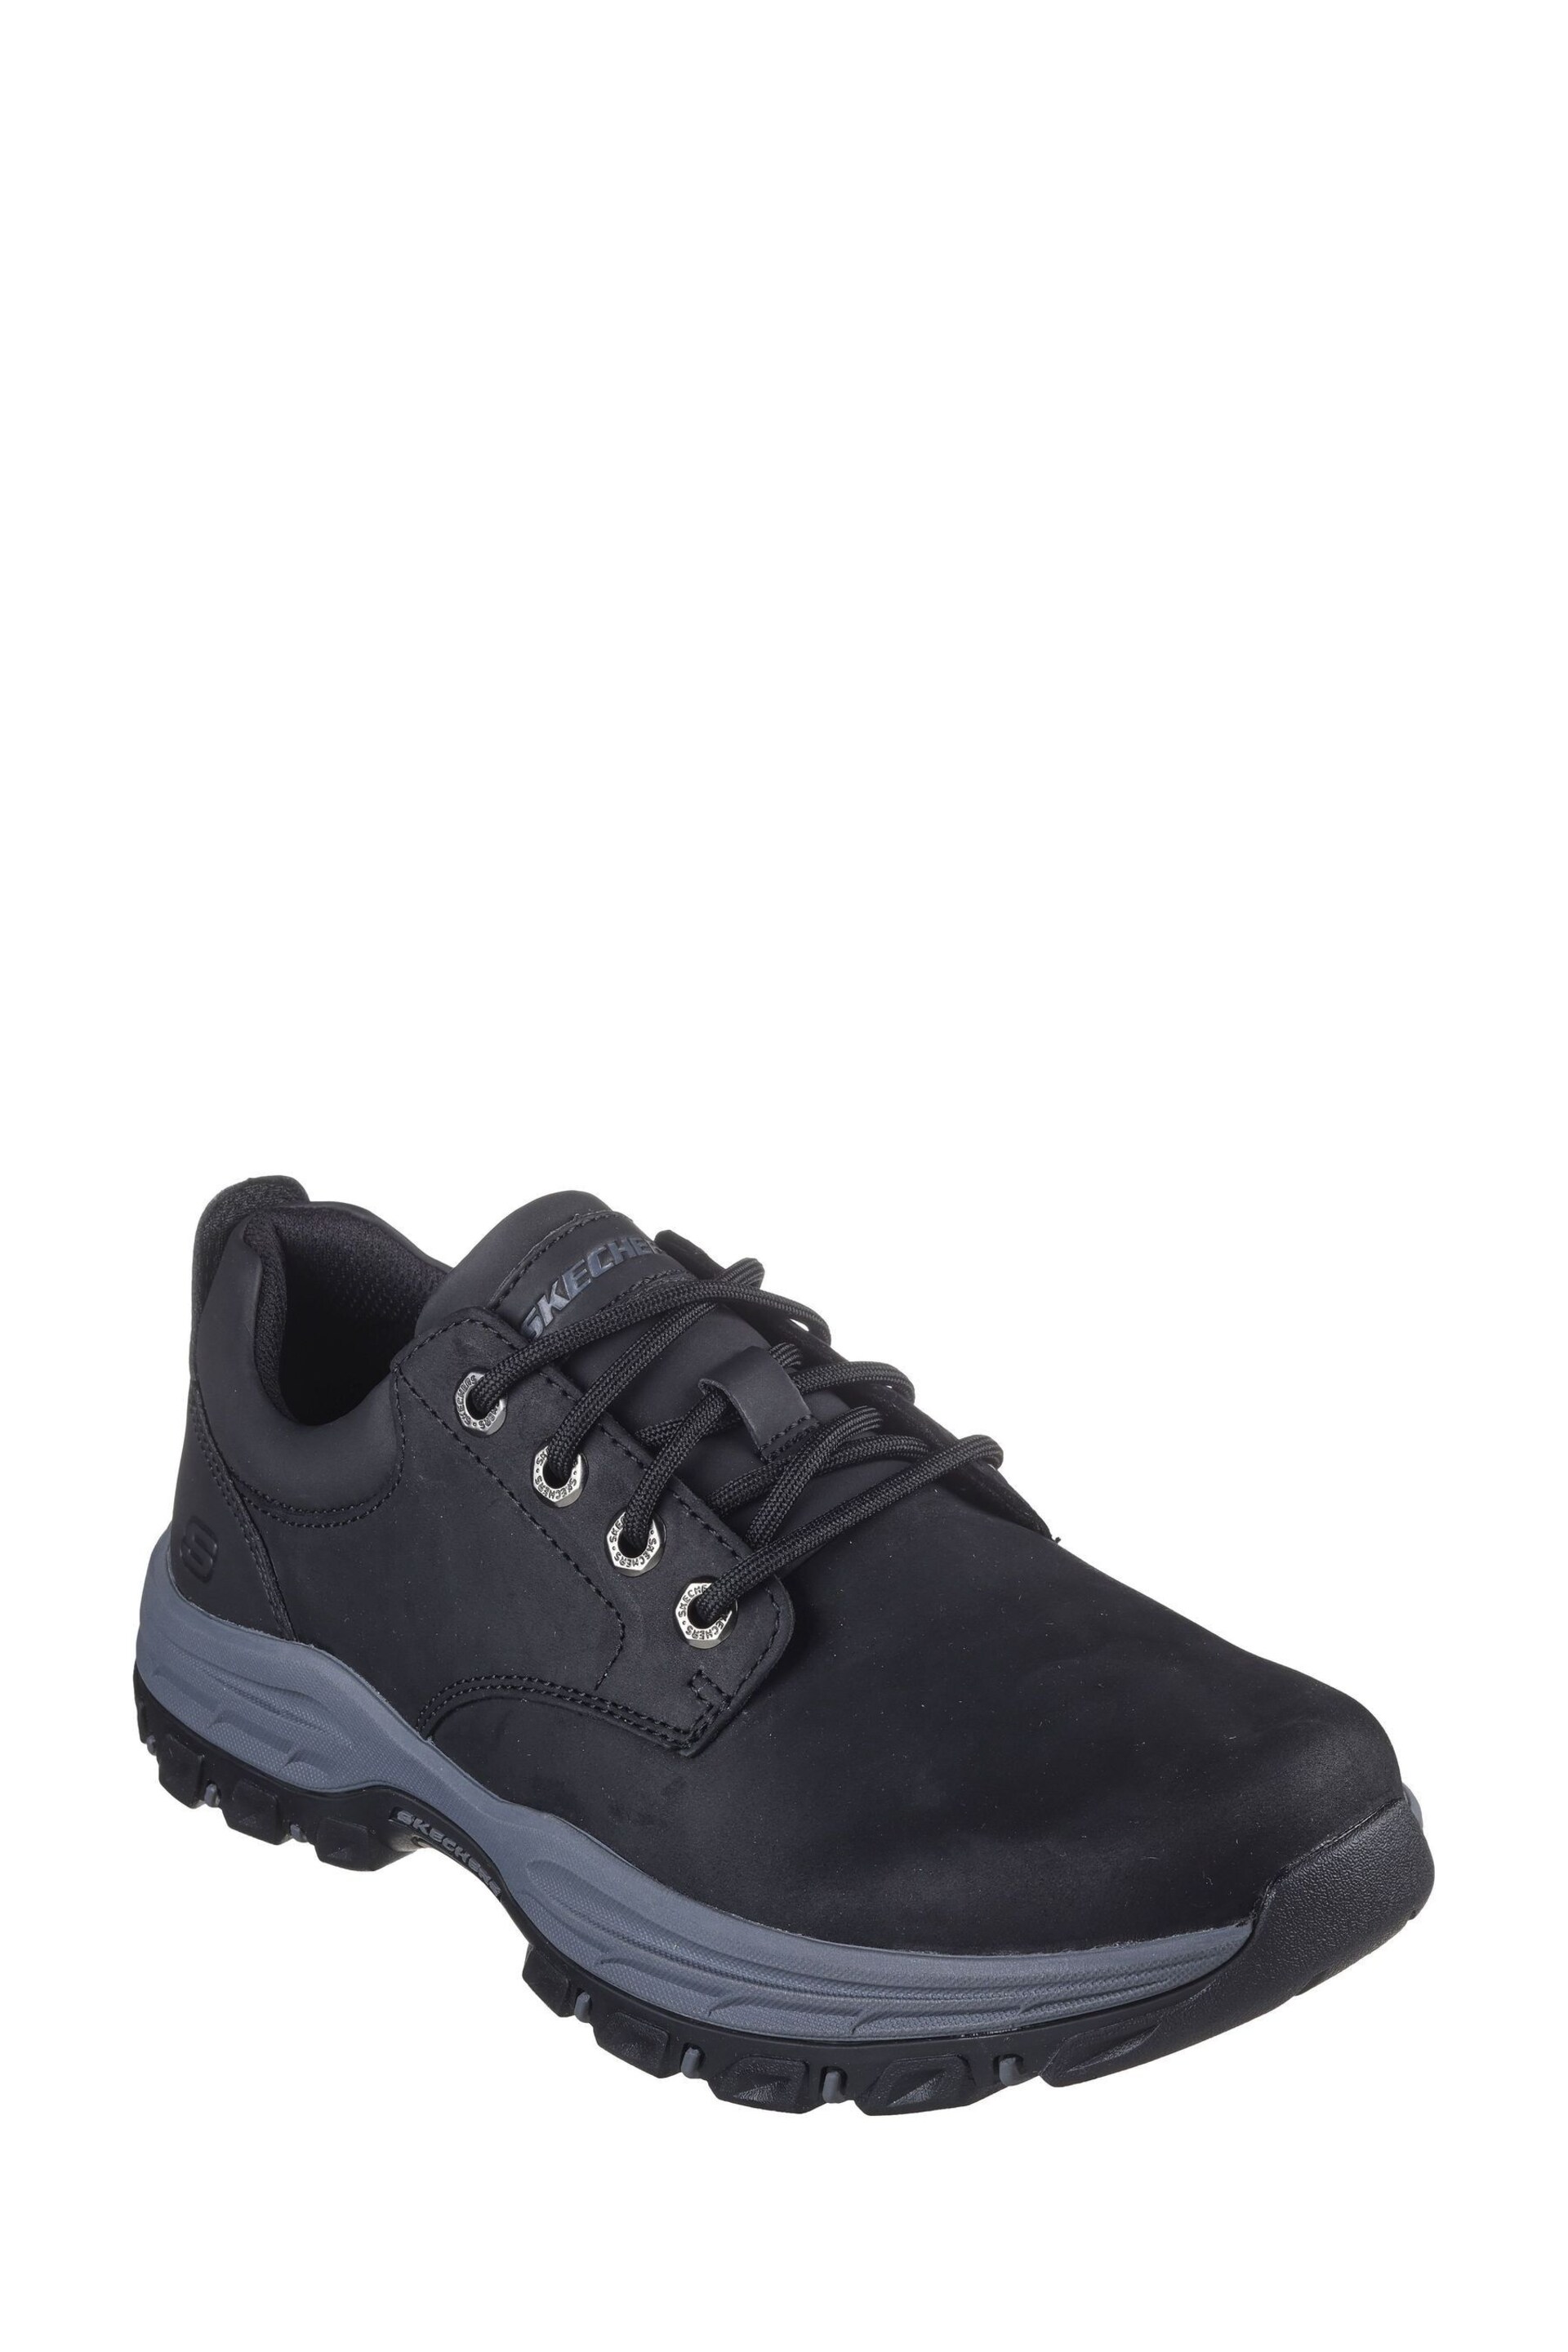 Skechers Black Knowlson Leland Lace-Up Shoes - Image 1 of 5